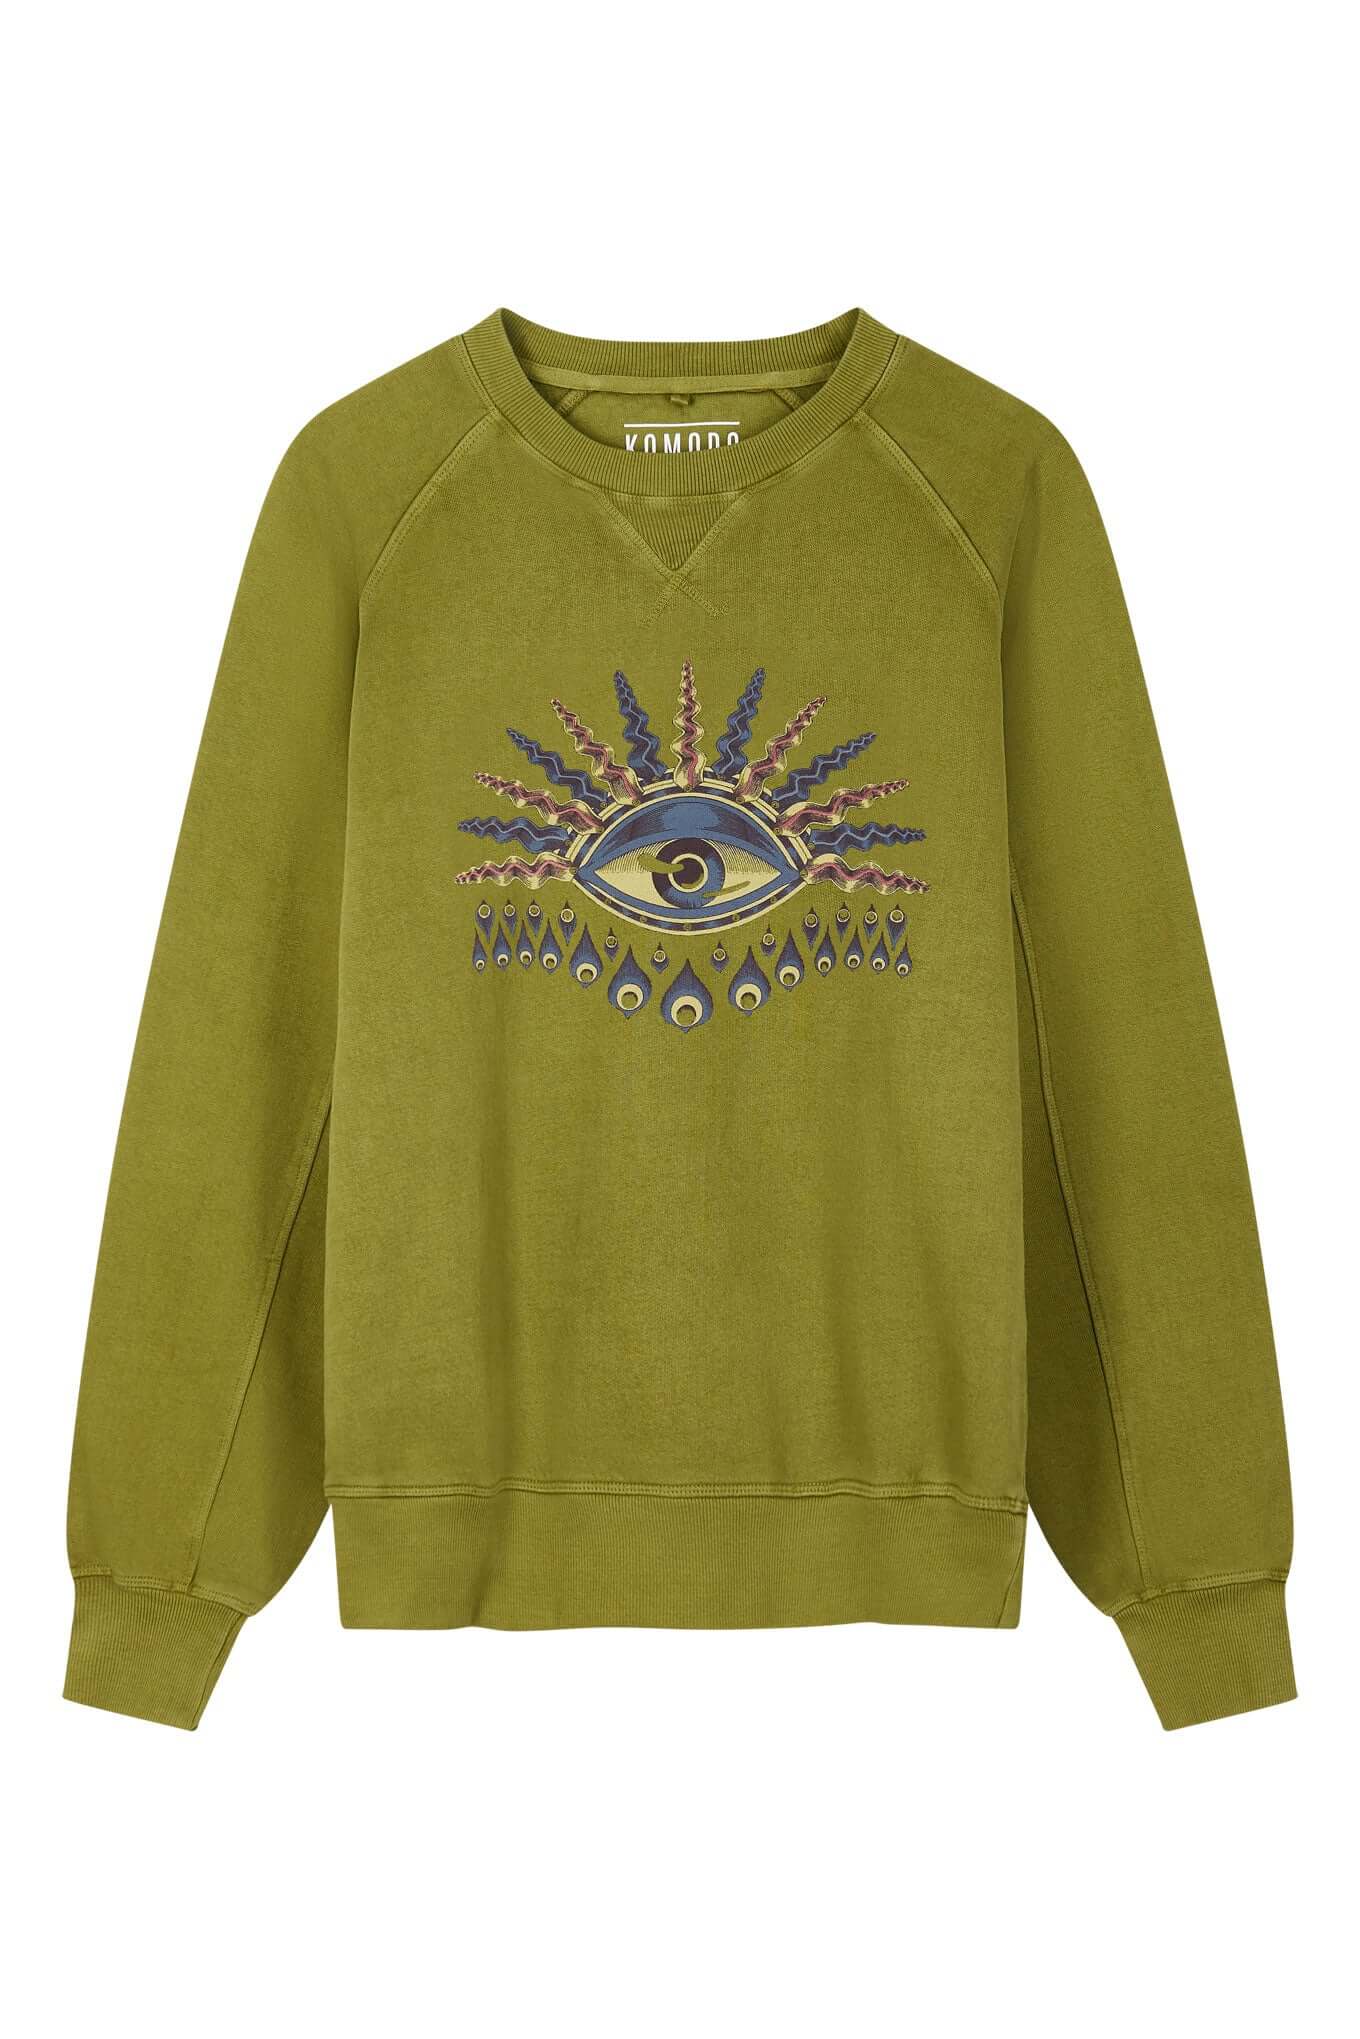 Oliver sweater ANTON Komodo Eye made of 100% organic cotton from Komodo